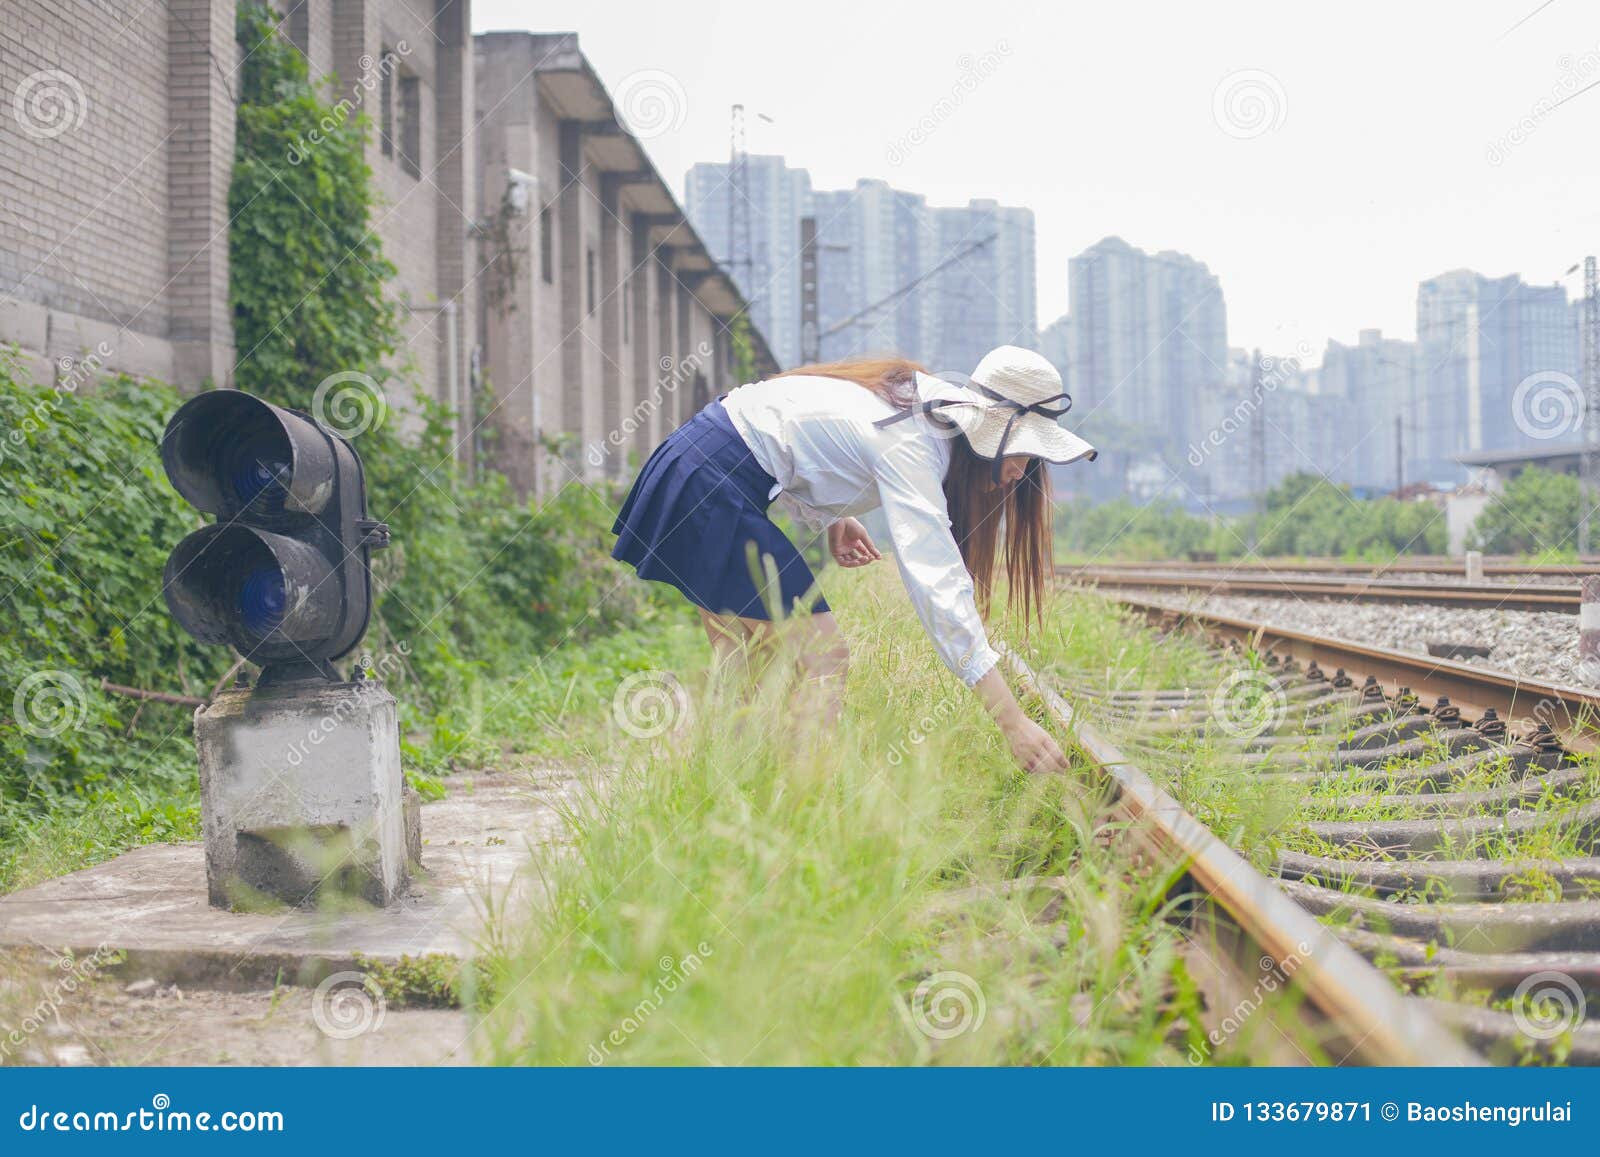 Girl Walking On Rusty Railroad Track Stock Photo 